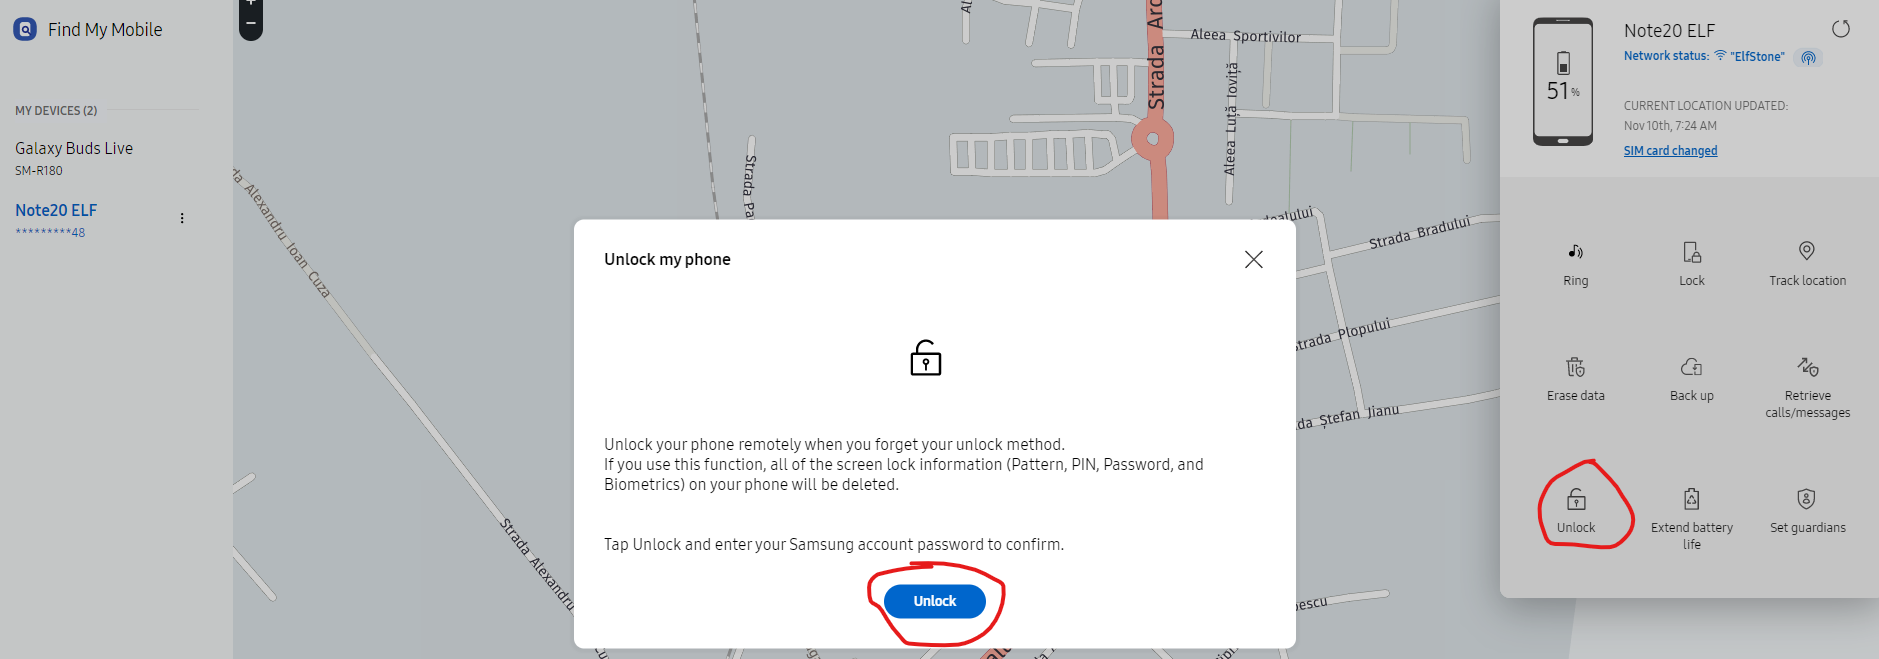 Cum scap de codul PIN de blocare? - Samsung Community